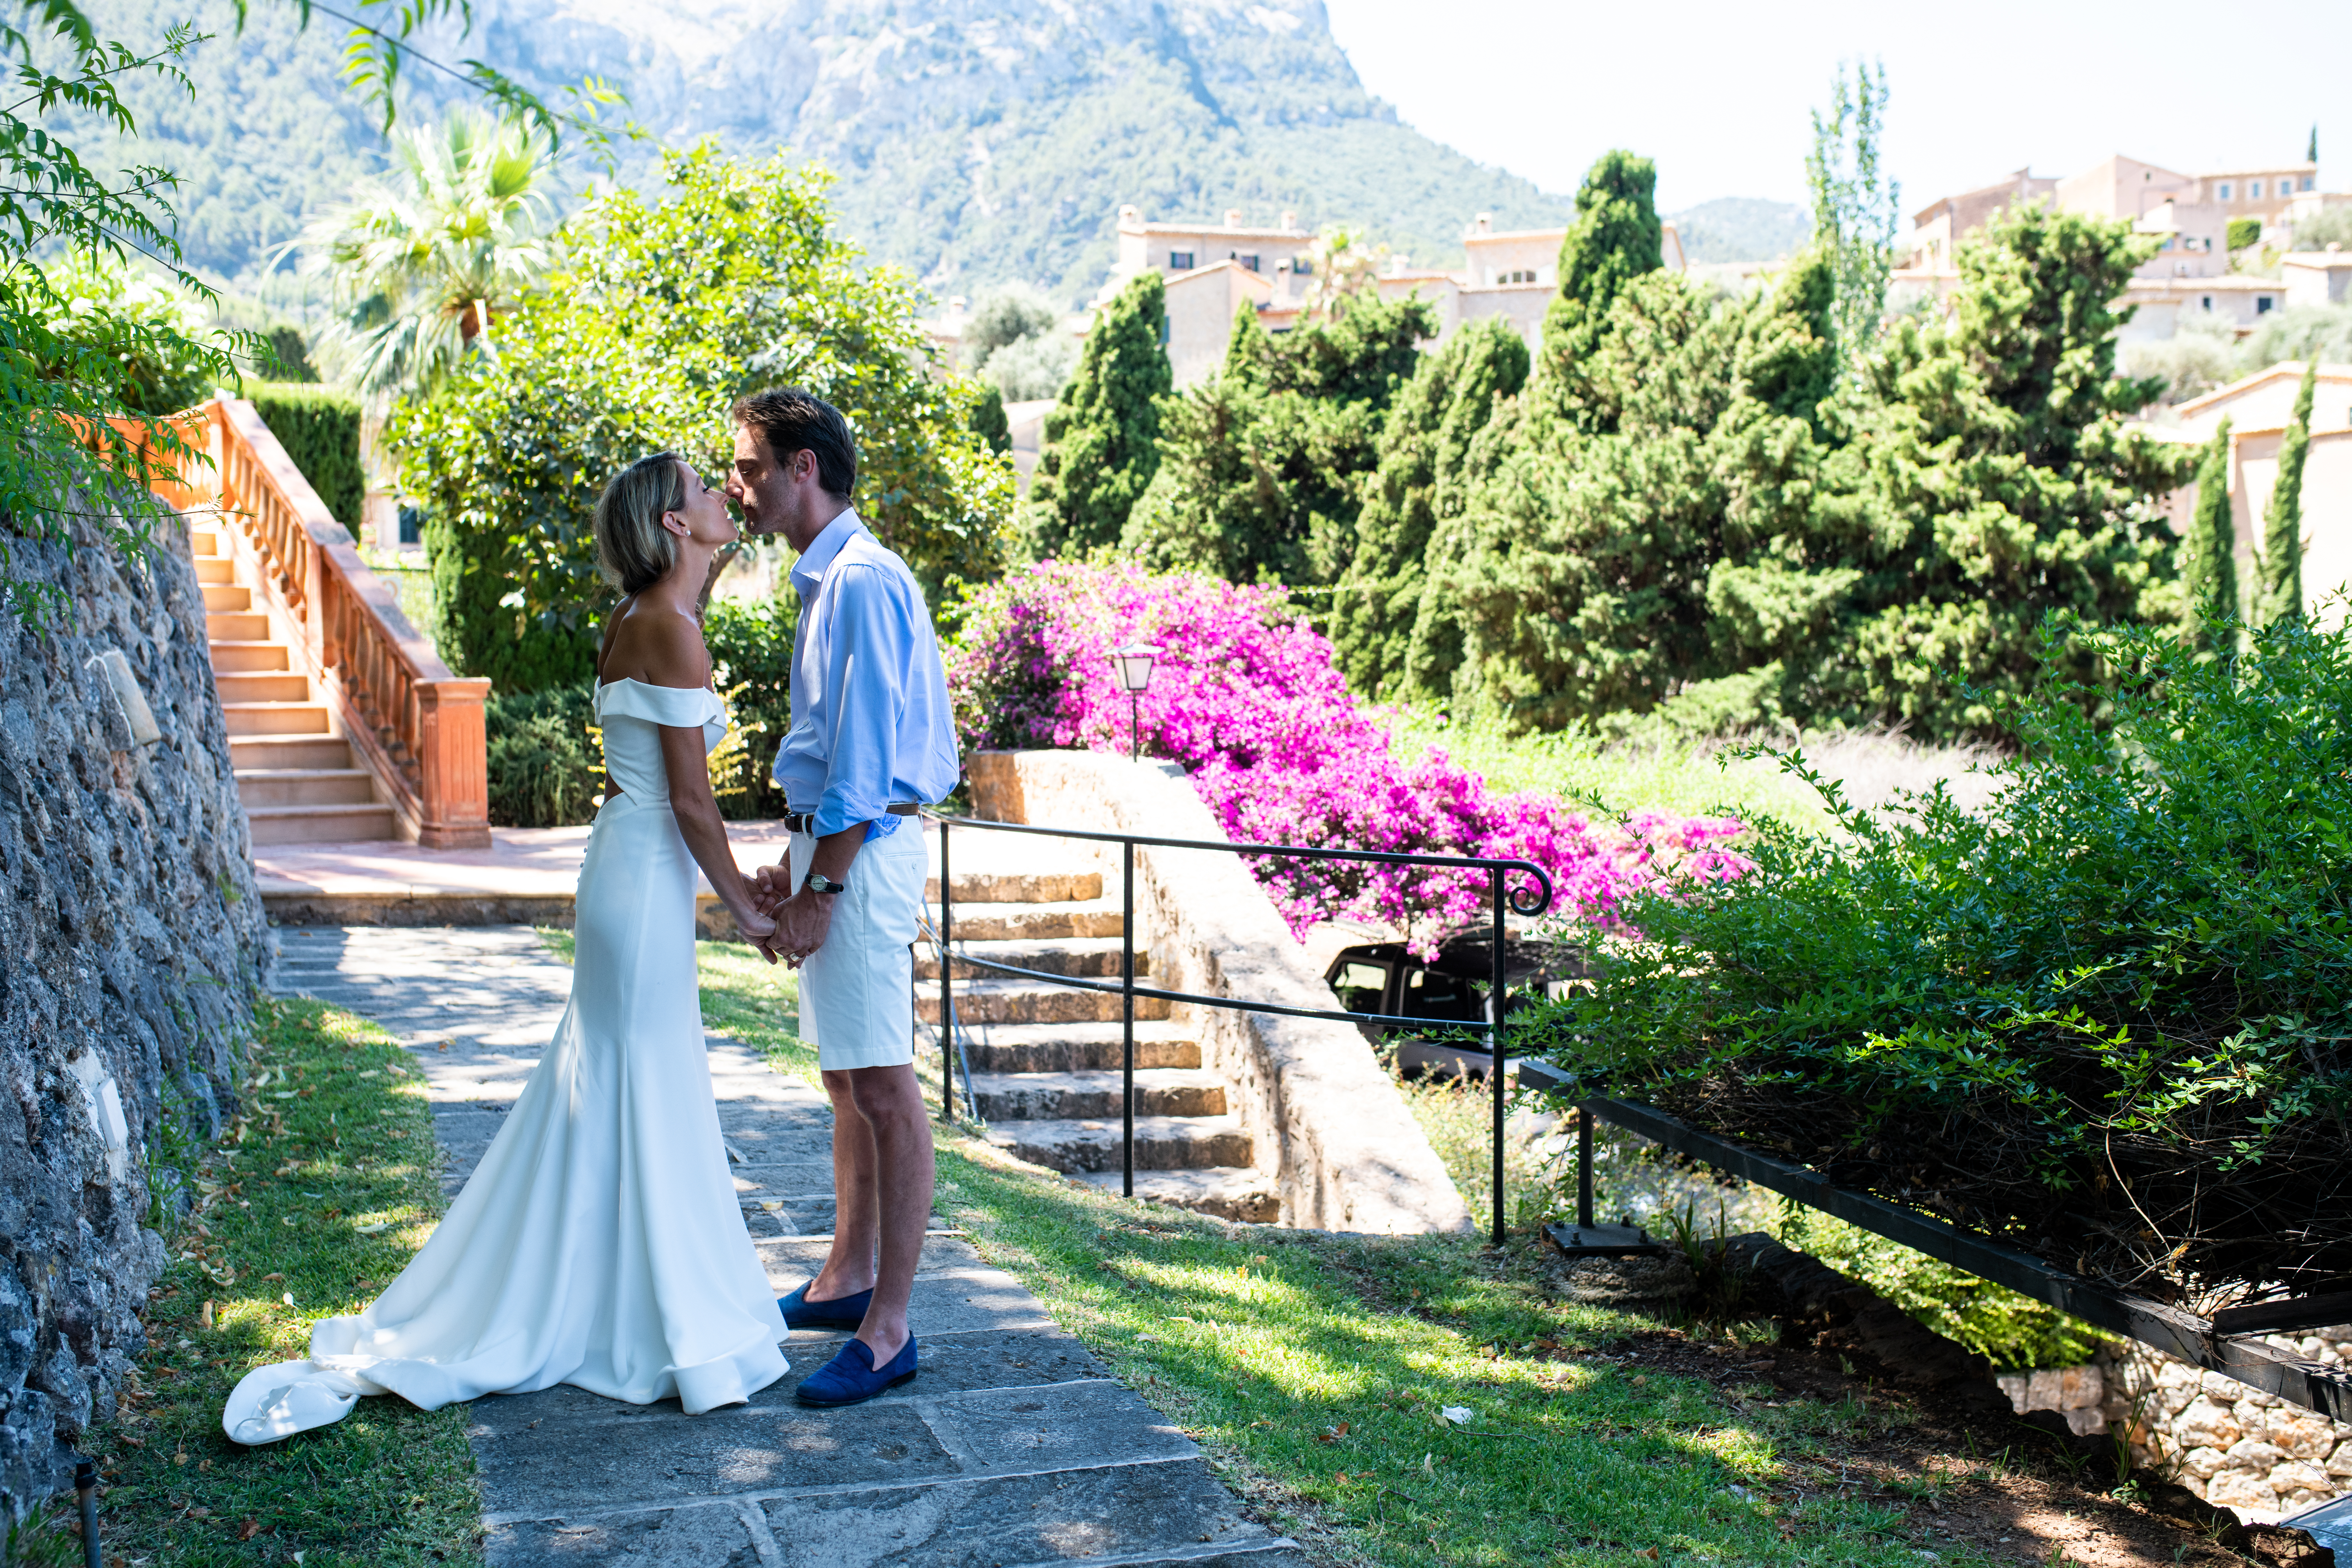 Wedding photoshoot by Laura, Localgrapher in Mallorca